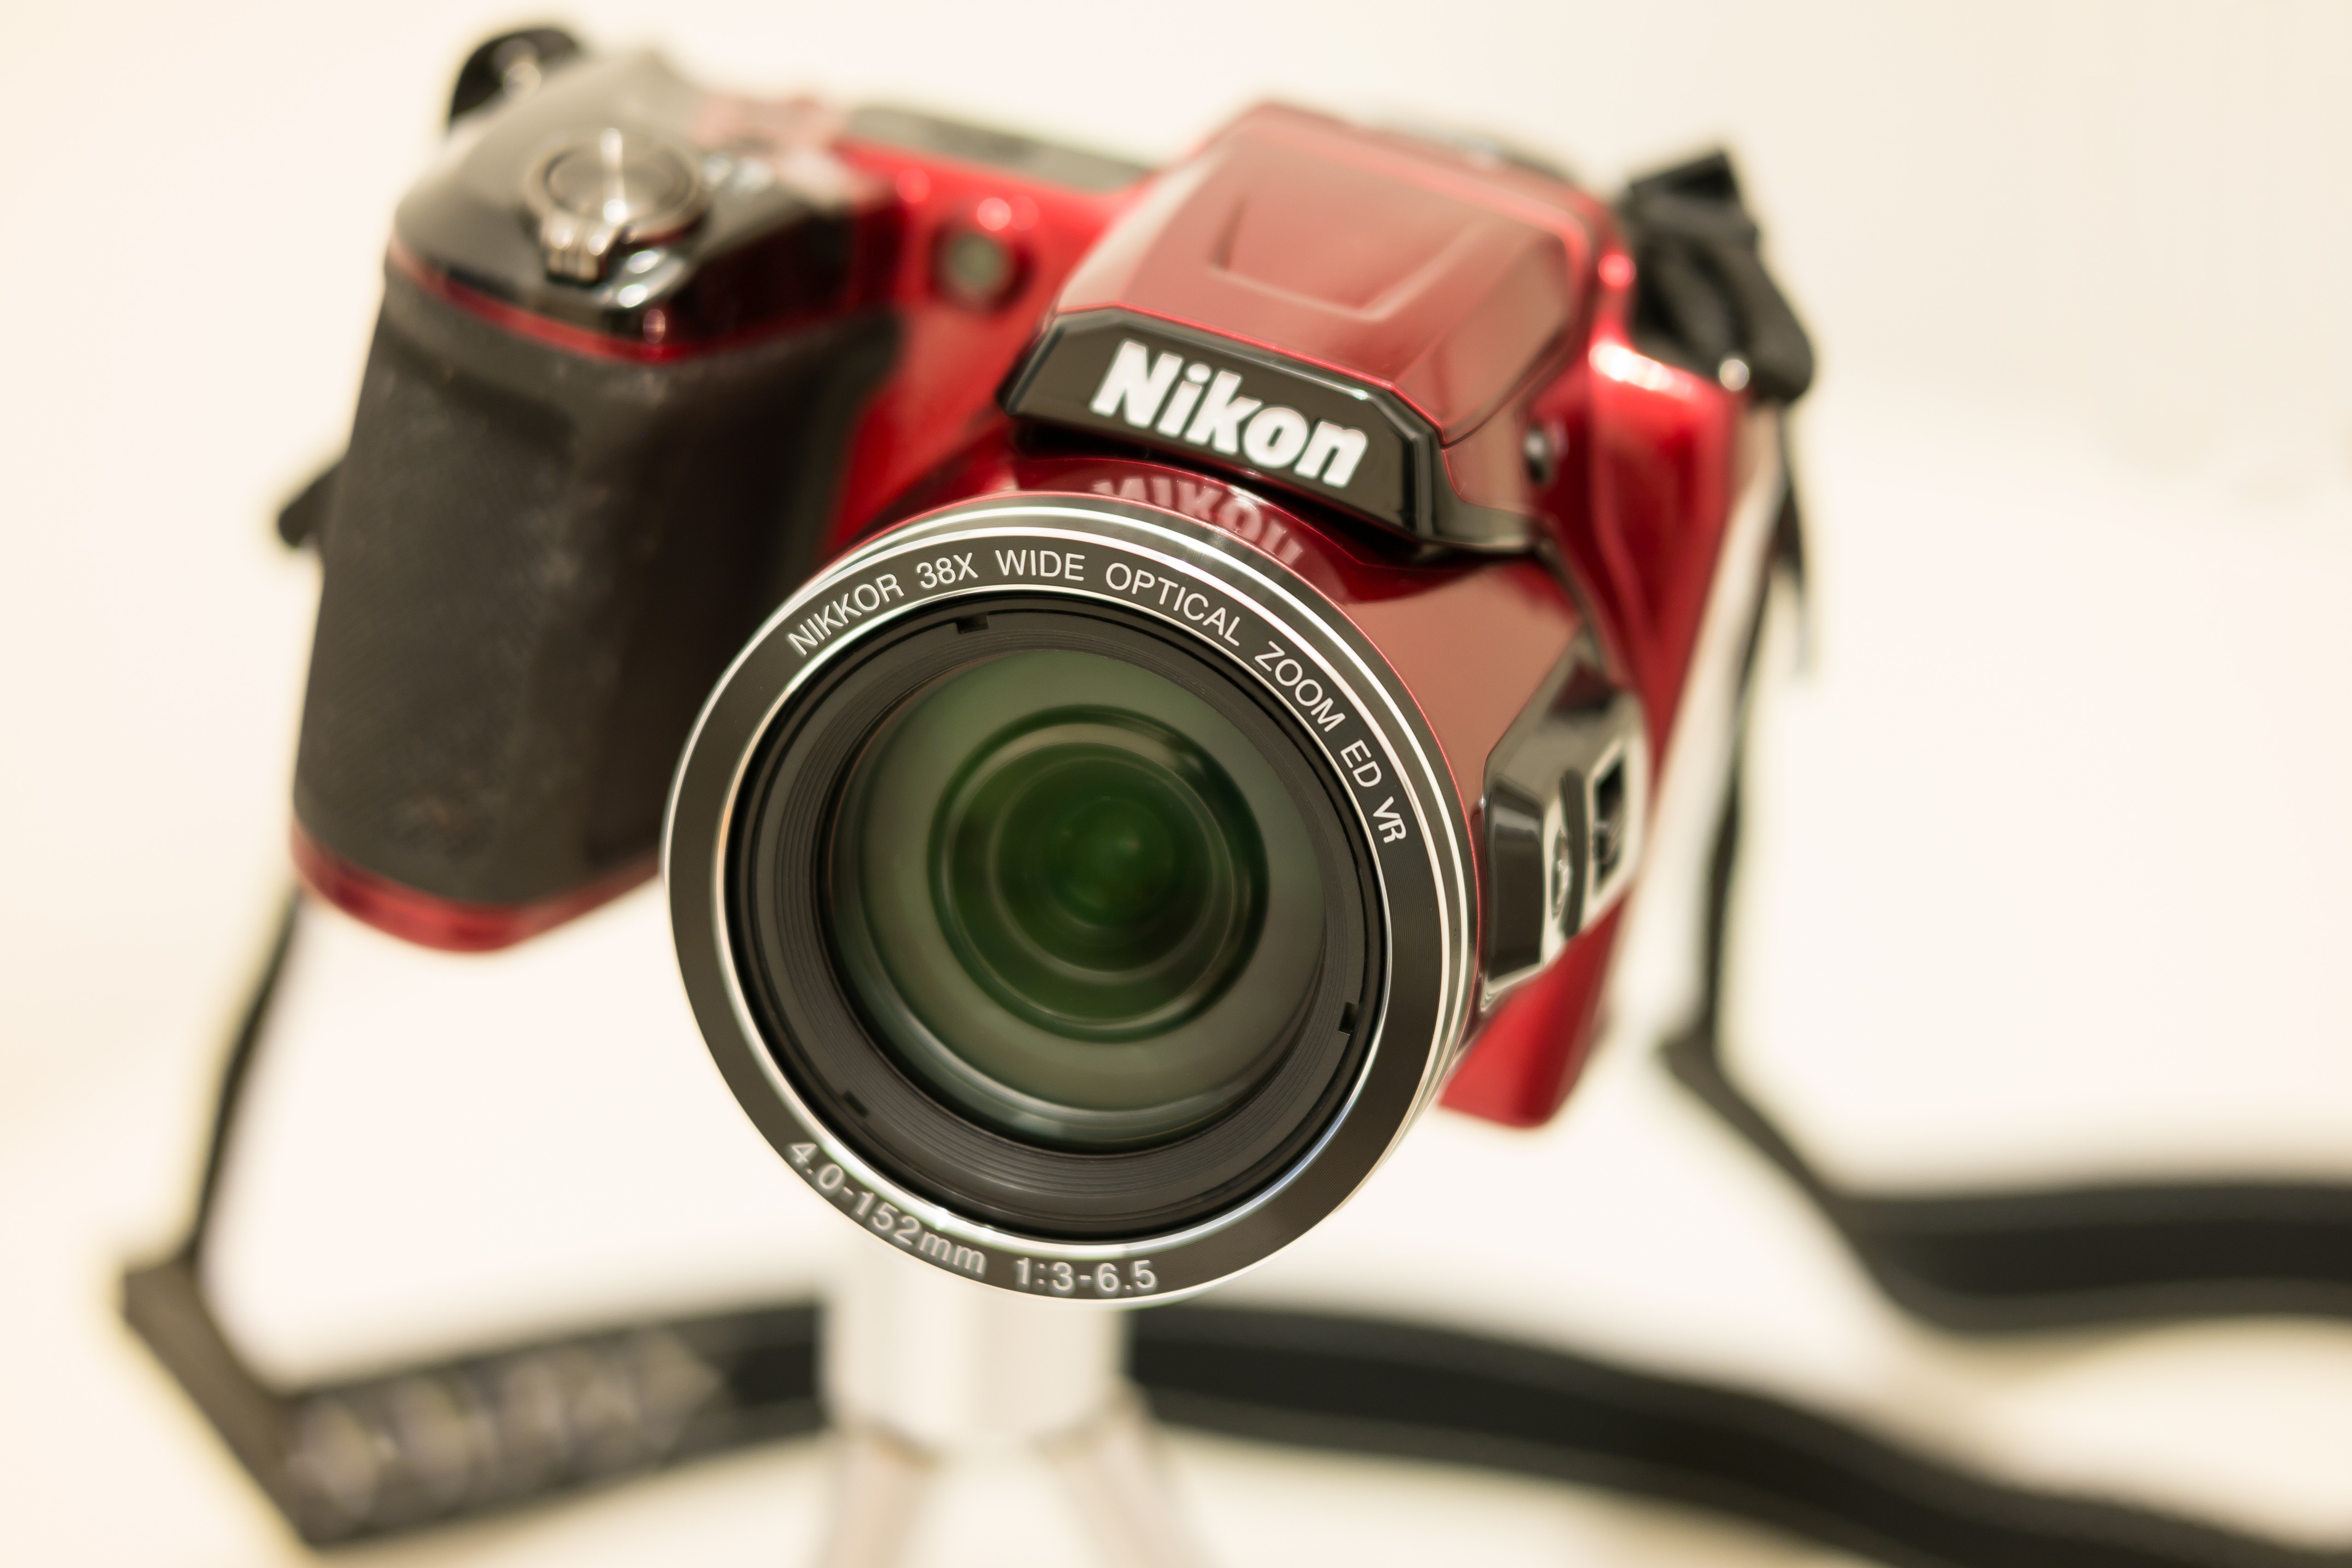 Digital Camera, Camera, Nikon, photography themes, camera - photographic equipment